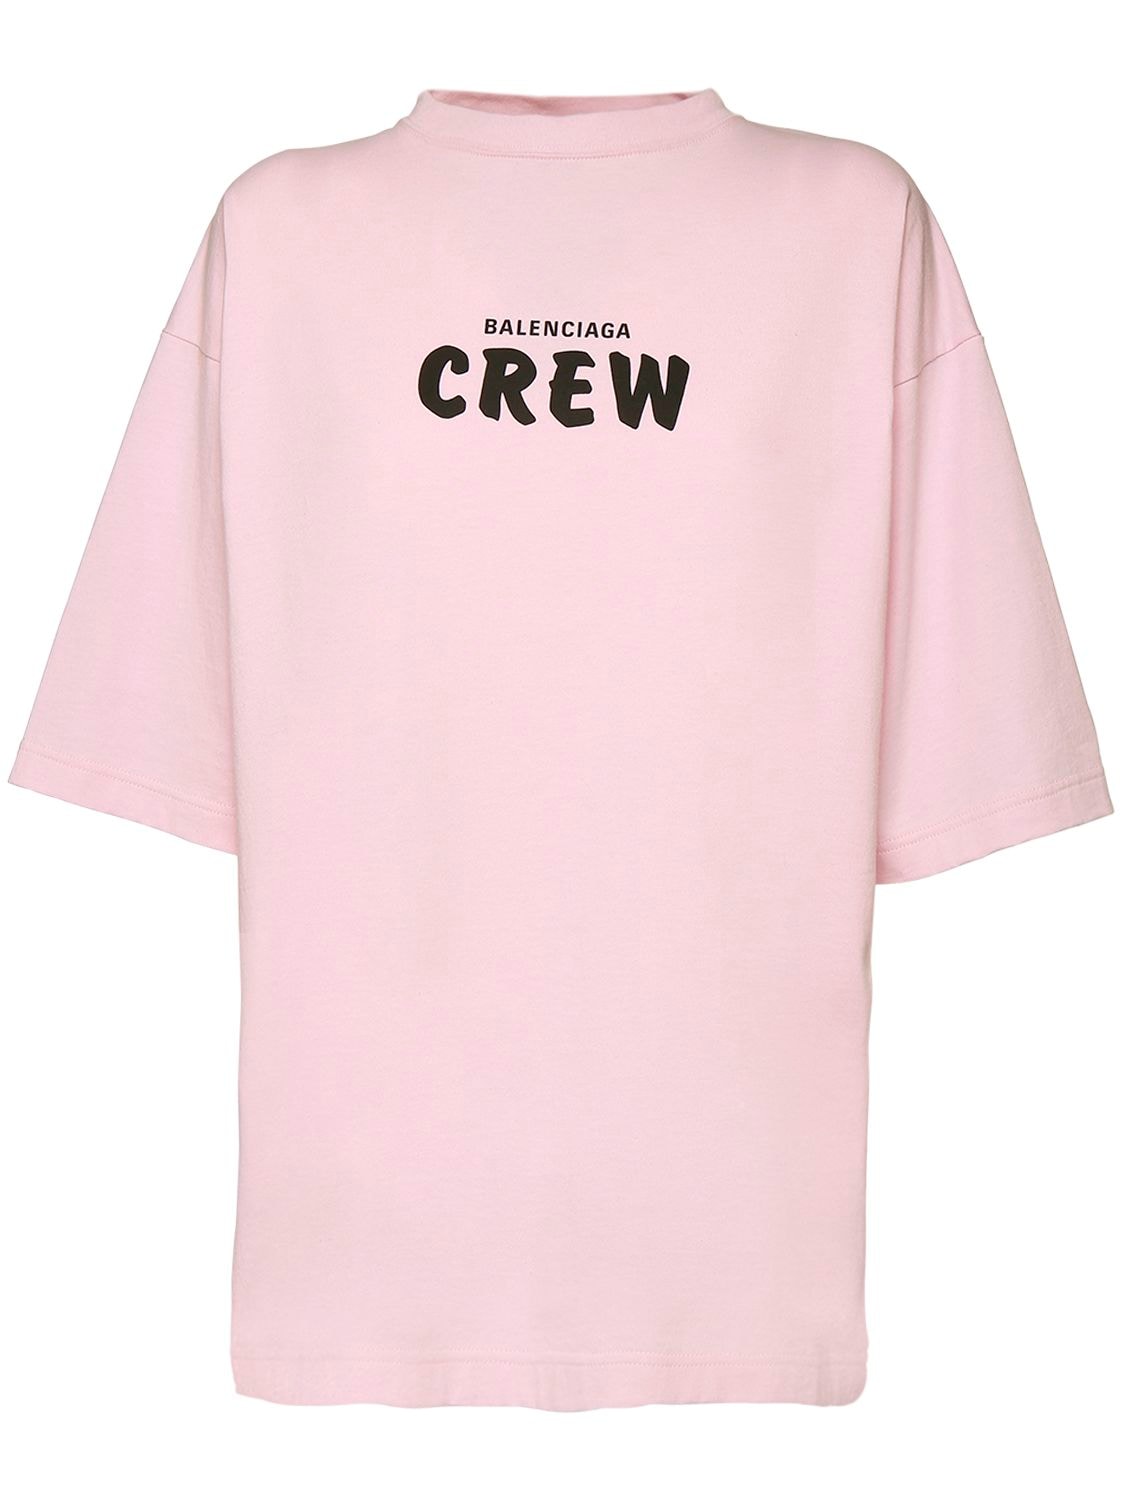 Oversize Crew Print Cotton T-shirt